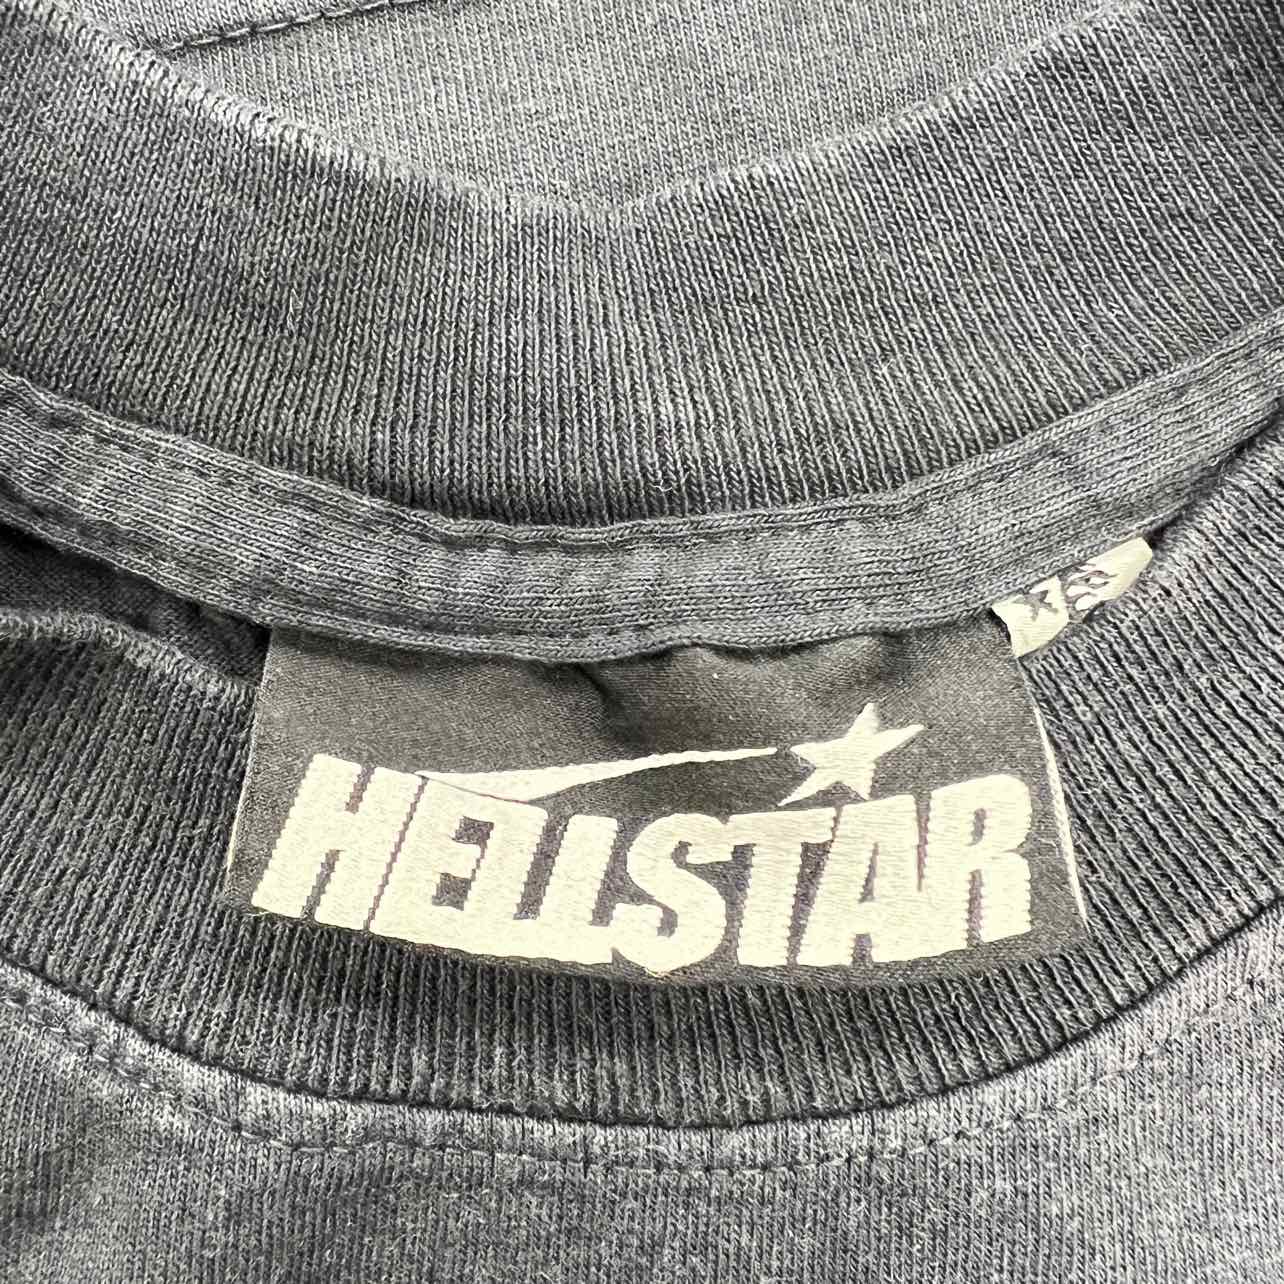 Hellstar T-Shirt "CLASSIC" Black New Size XL